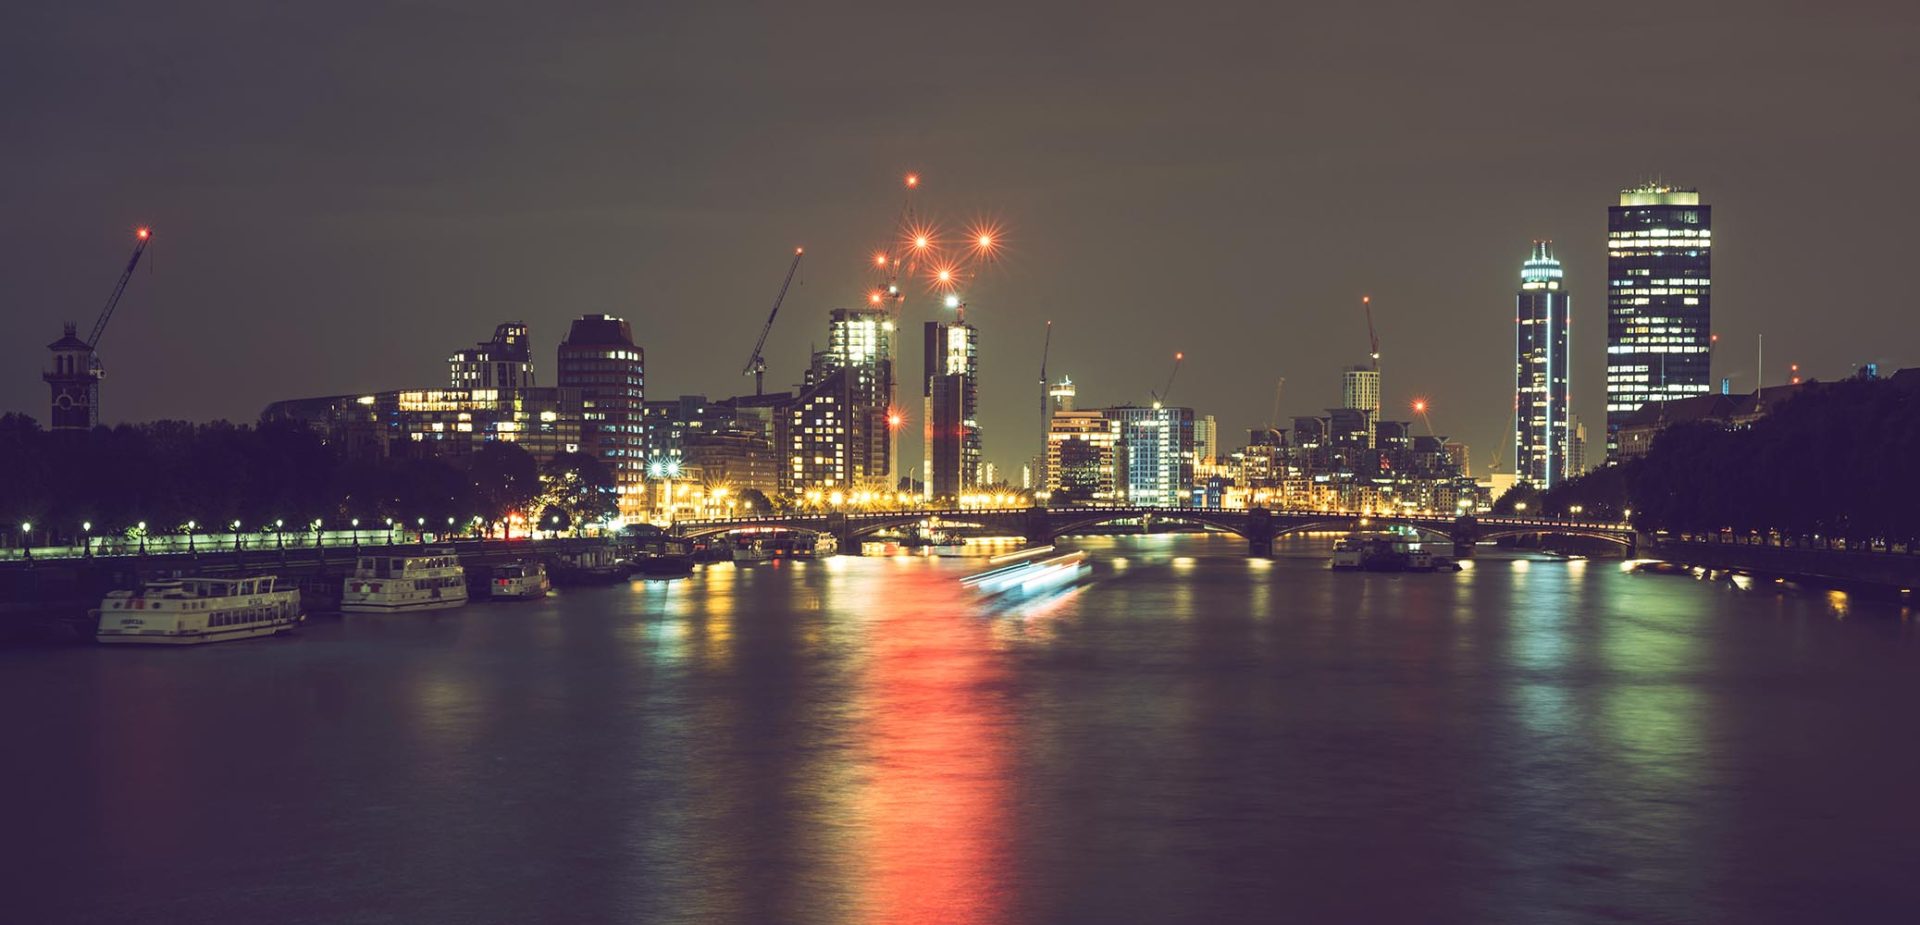 The skyline of London